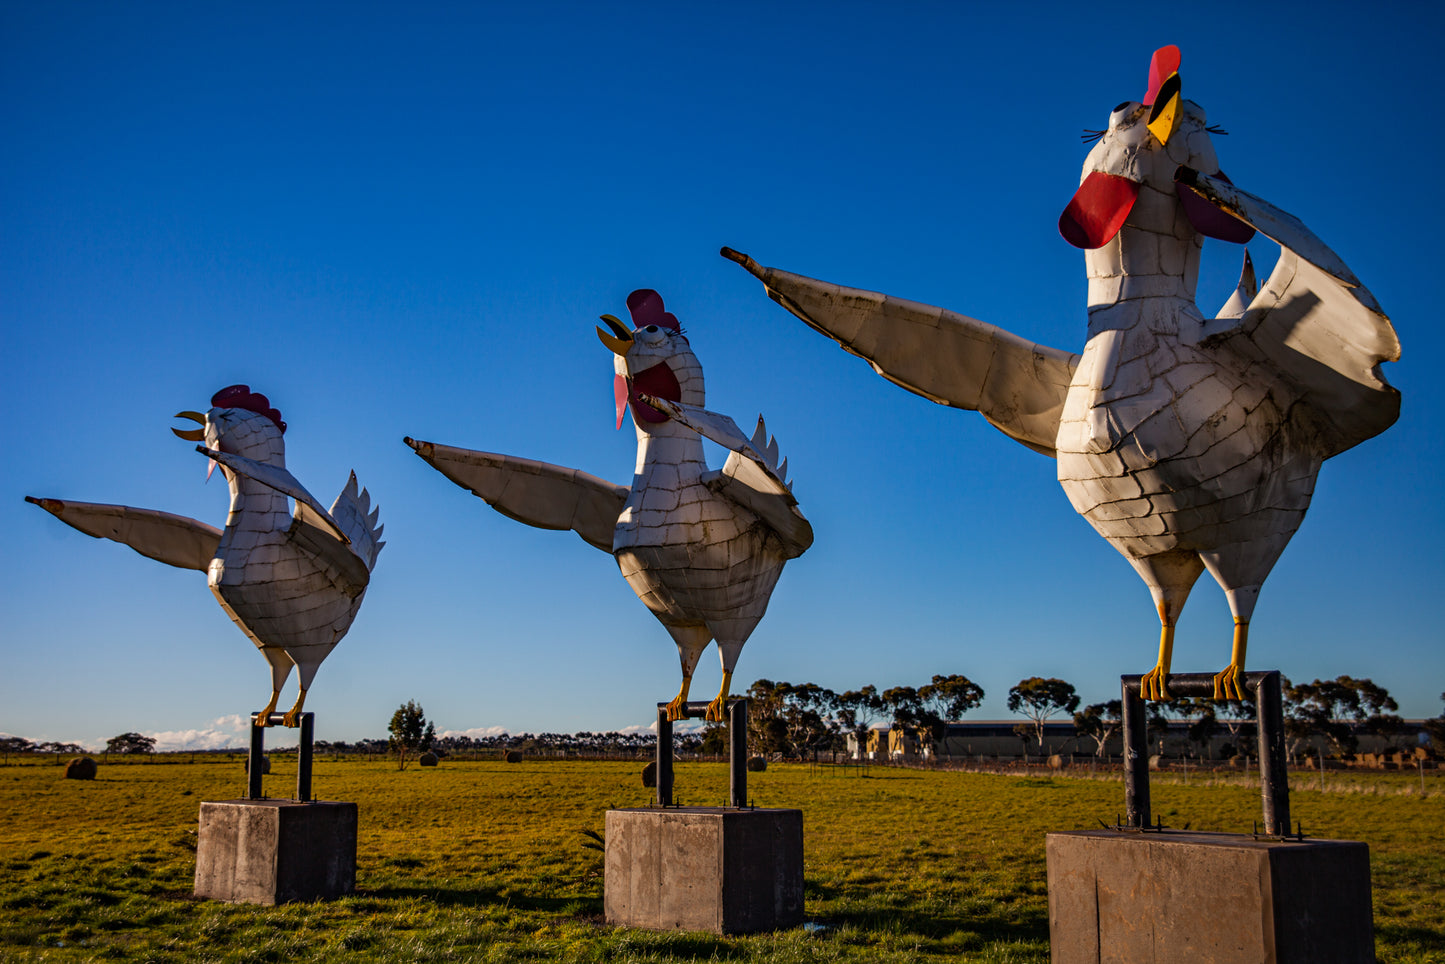 Big Hens, Meredith, Australia